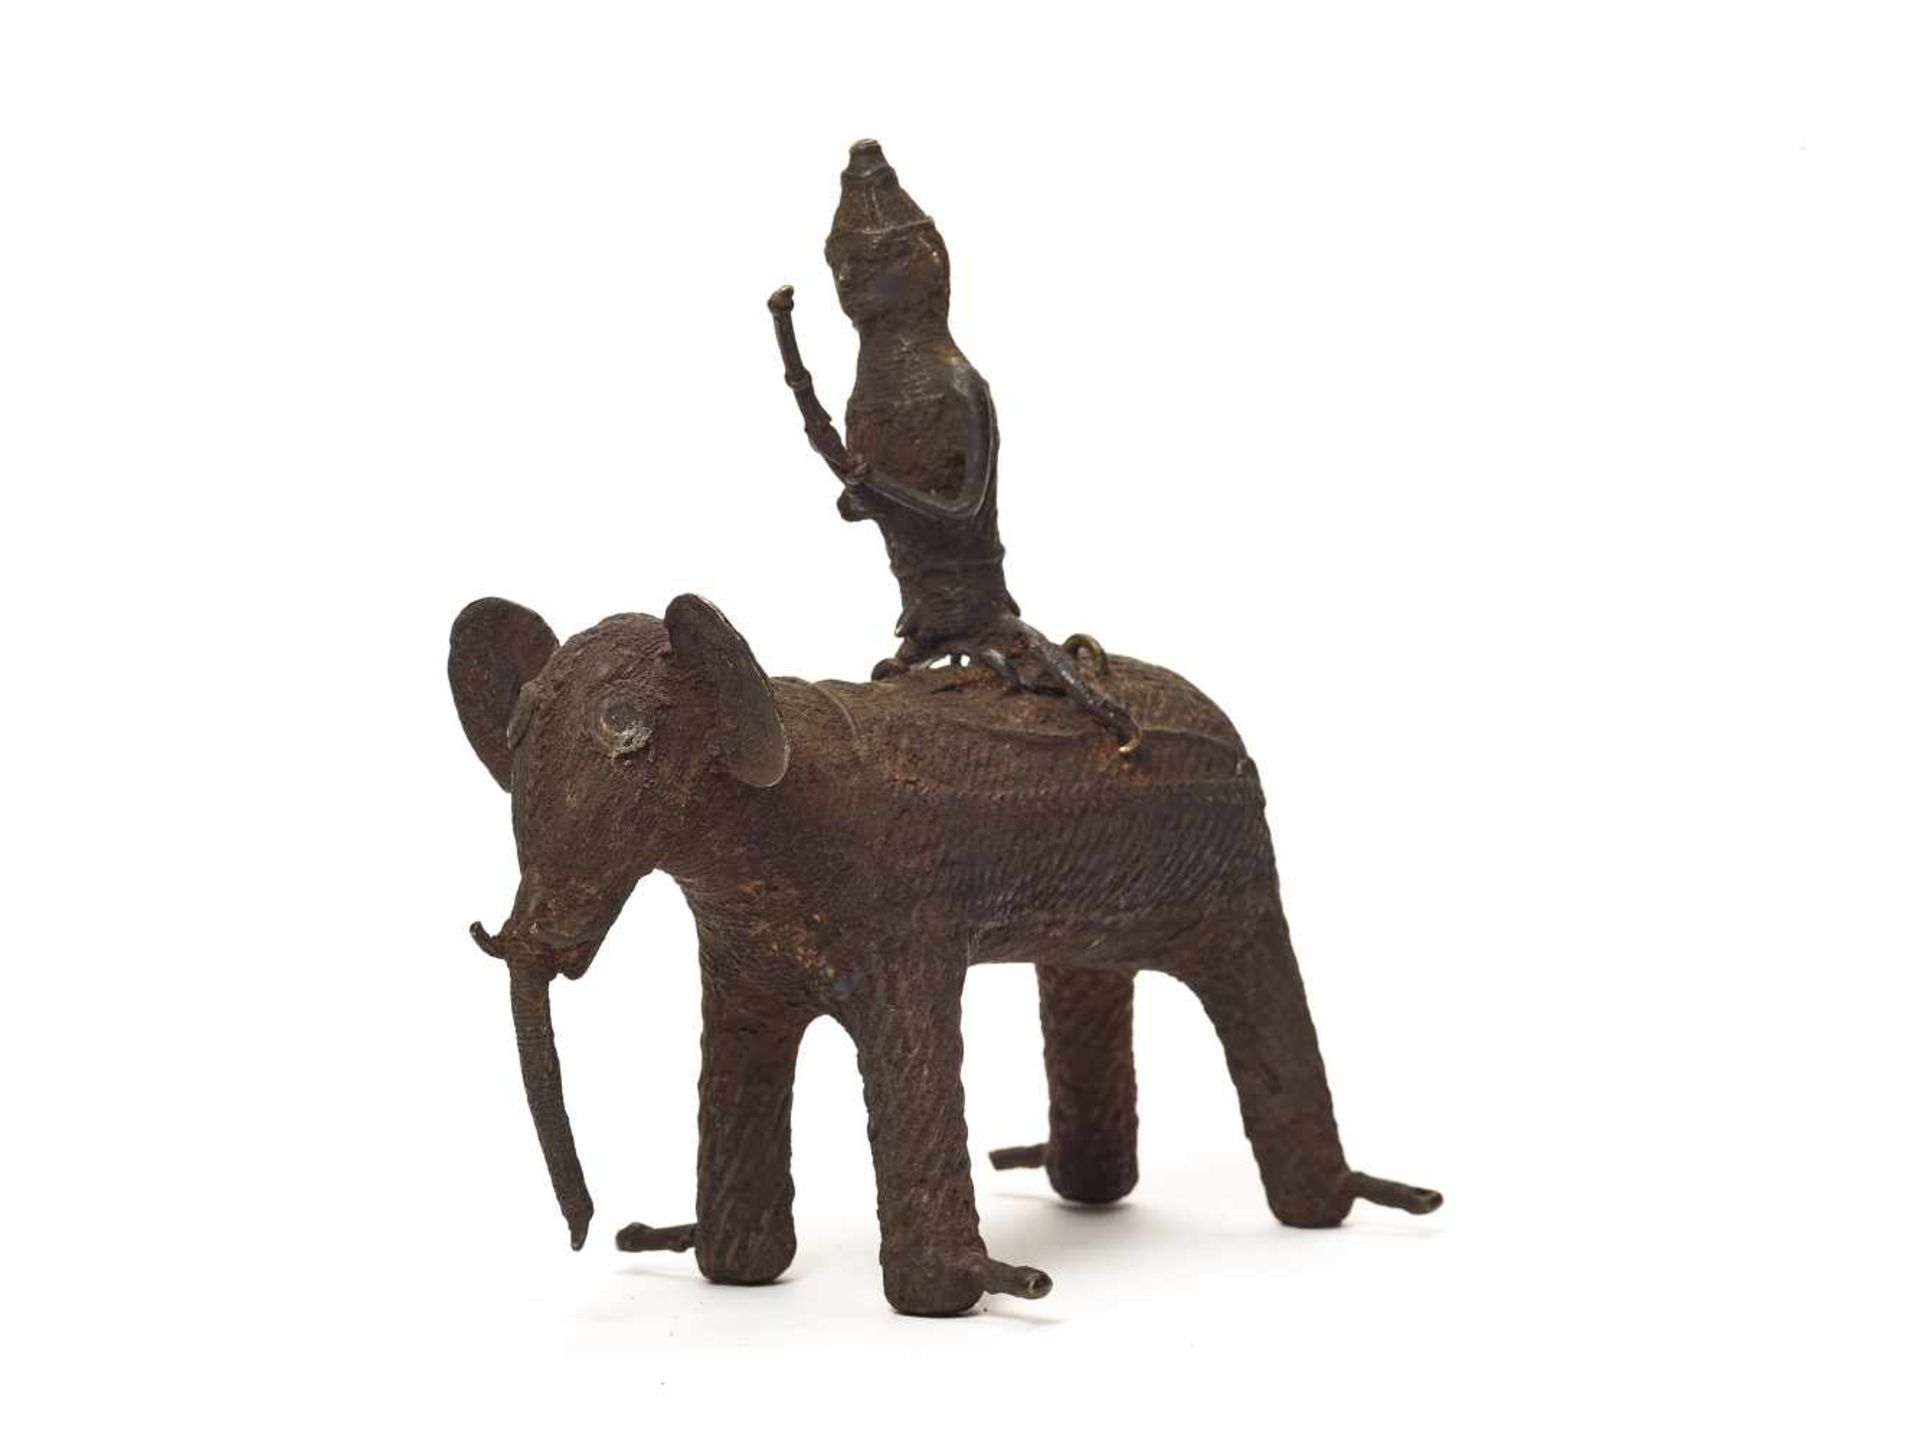 A KONDH TRIBAL BRONZE GROUP OF A WARRIOR RIDING AN ELEPHANT Copper bronzeEastern India, Kondh Tribe,